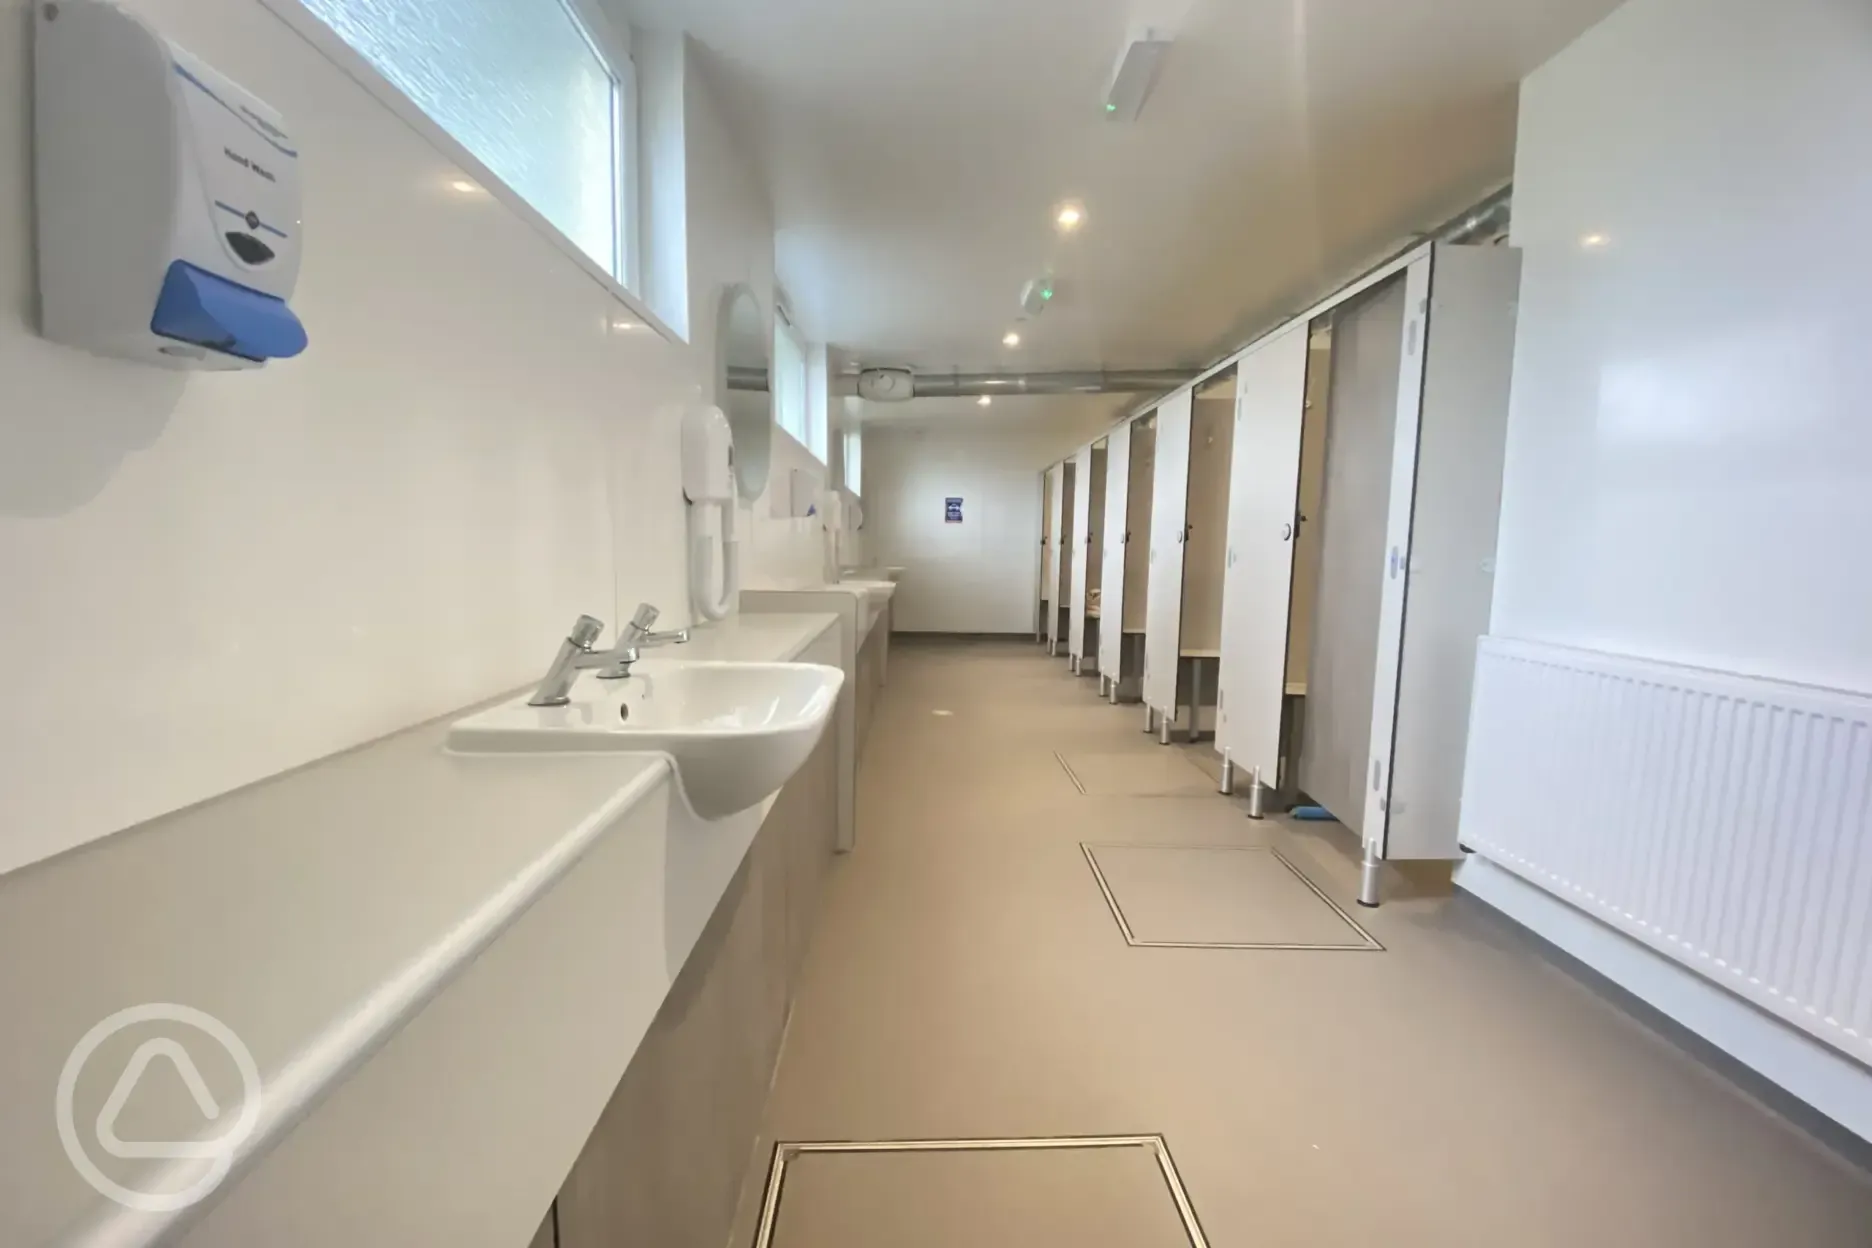 Toilets interior